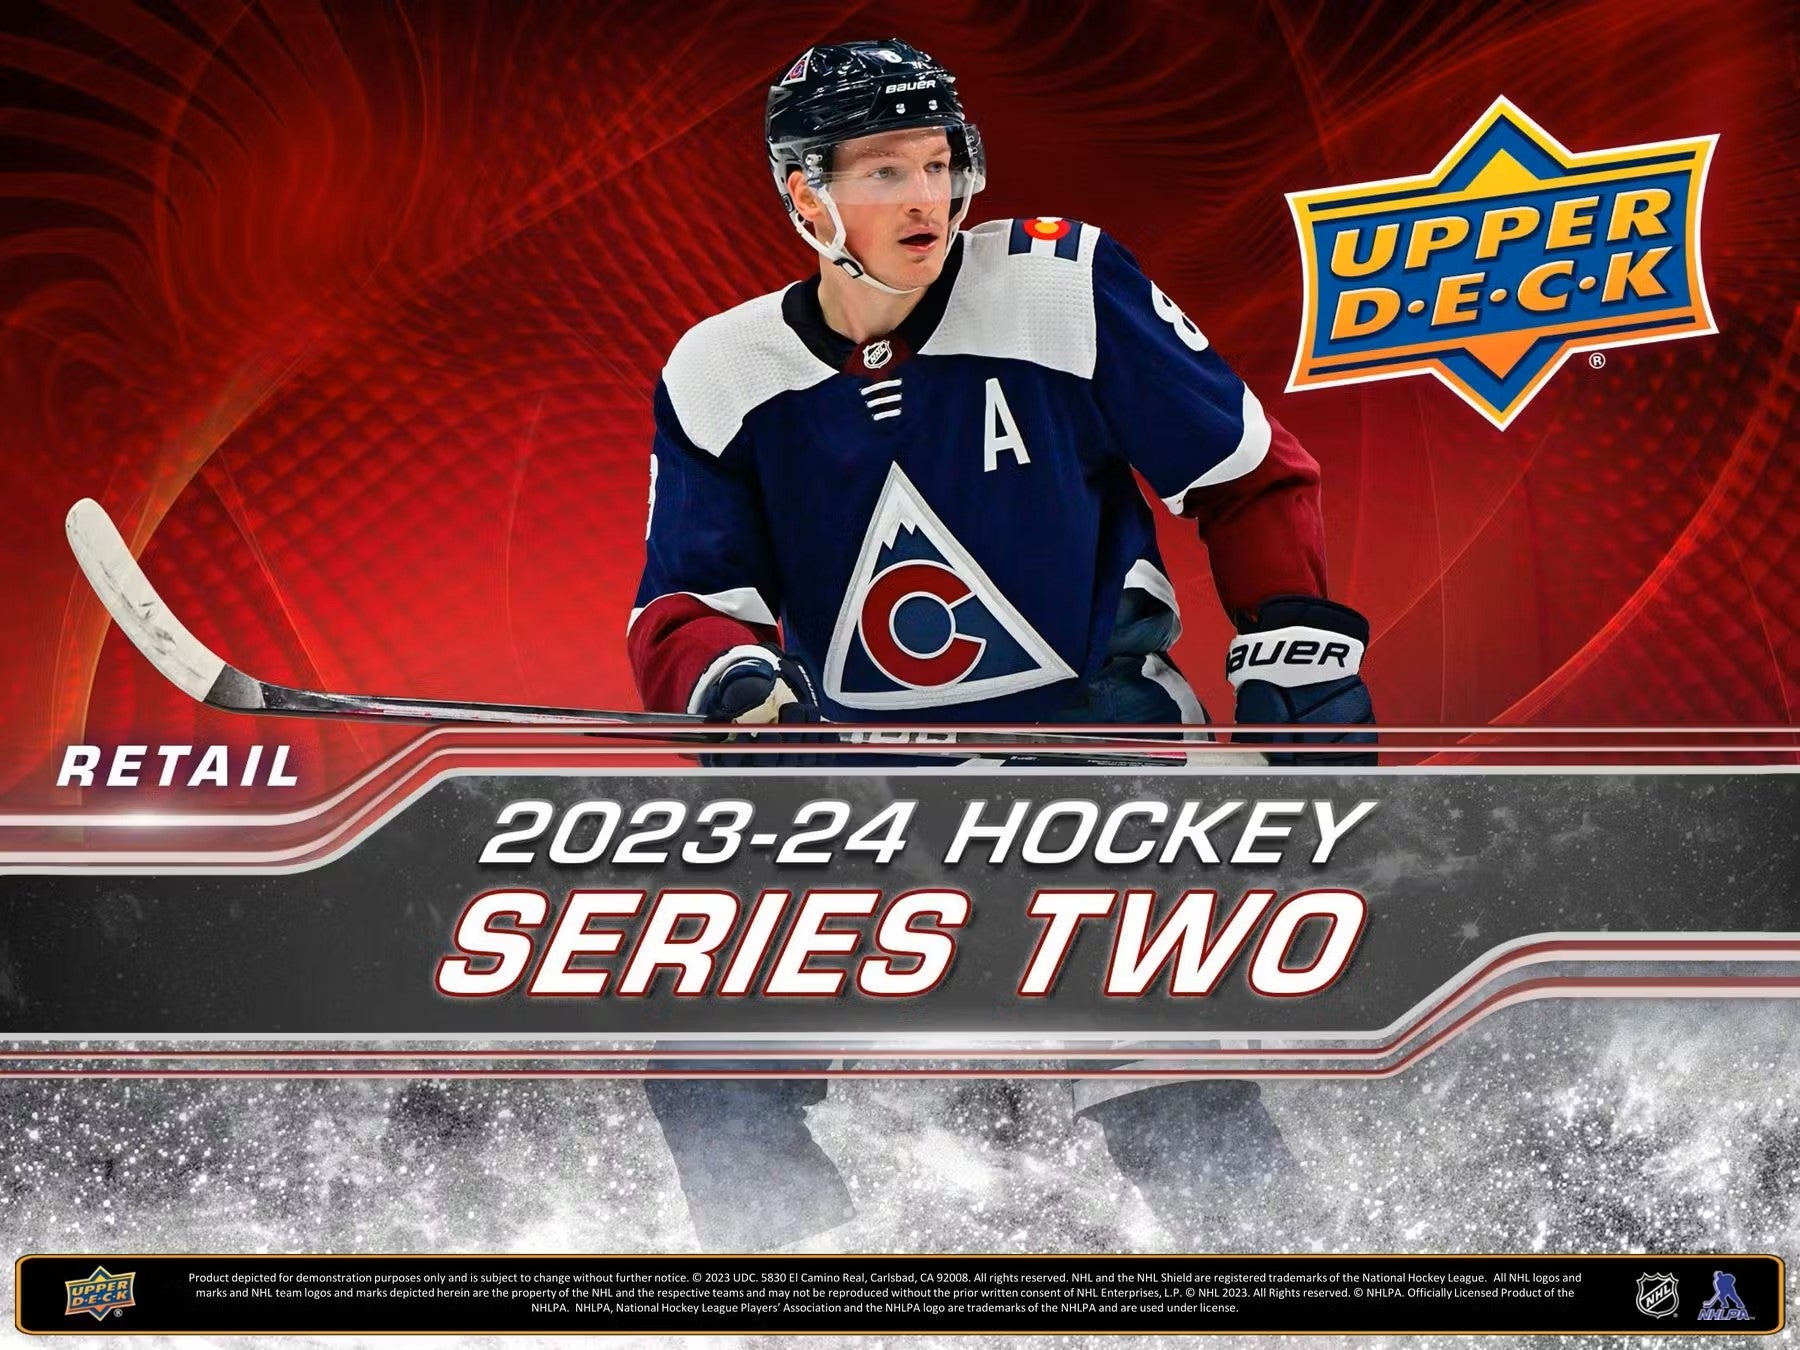 2023 24 upper deck series 1 hockey tin box